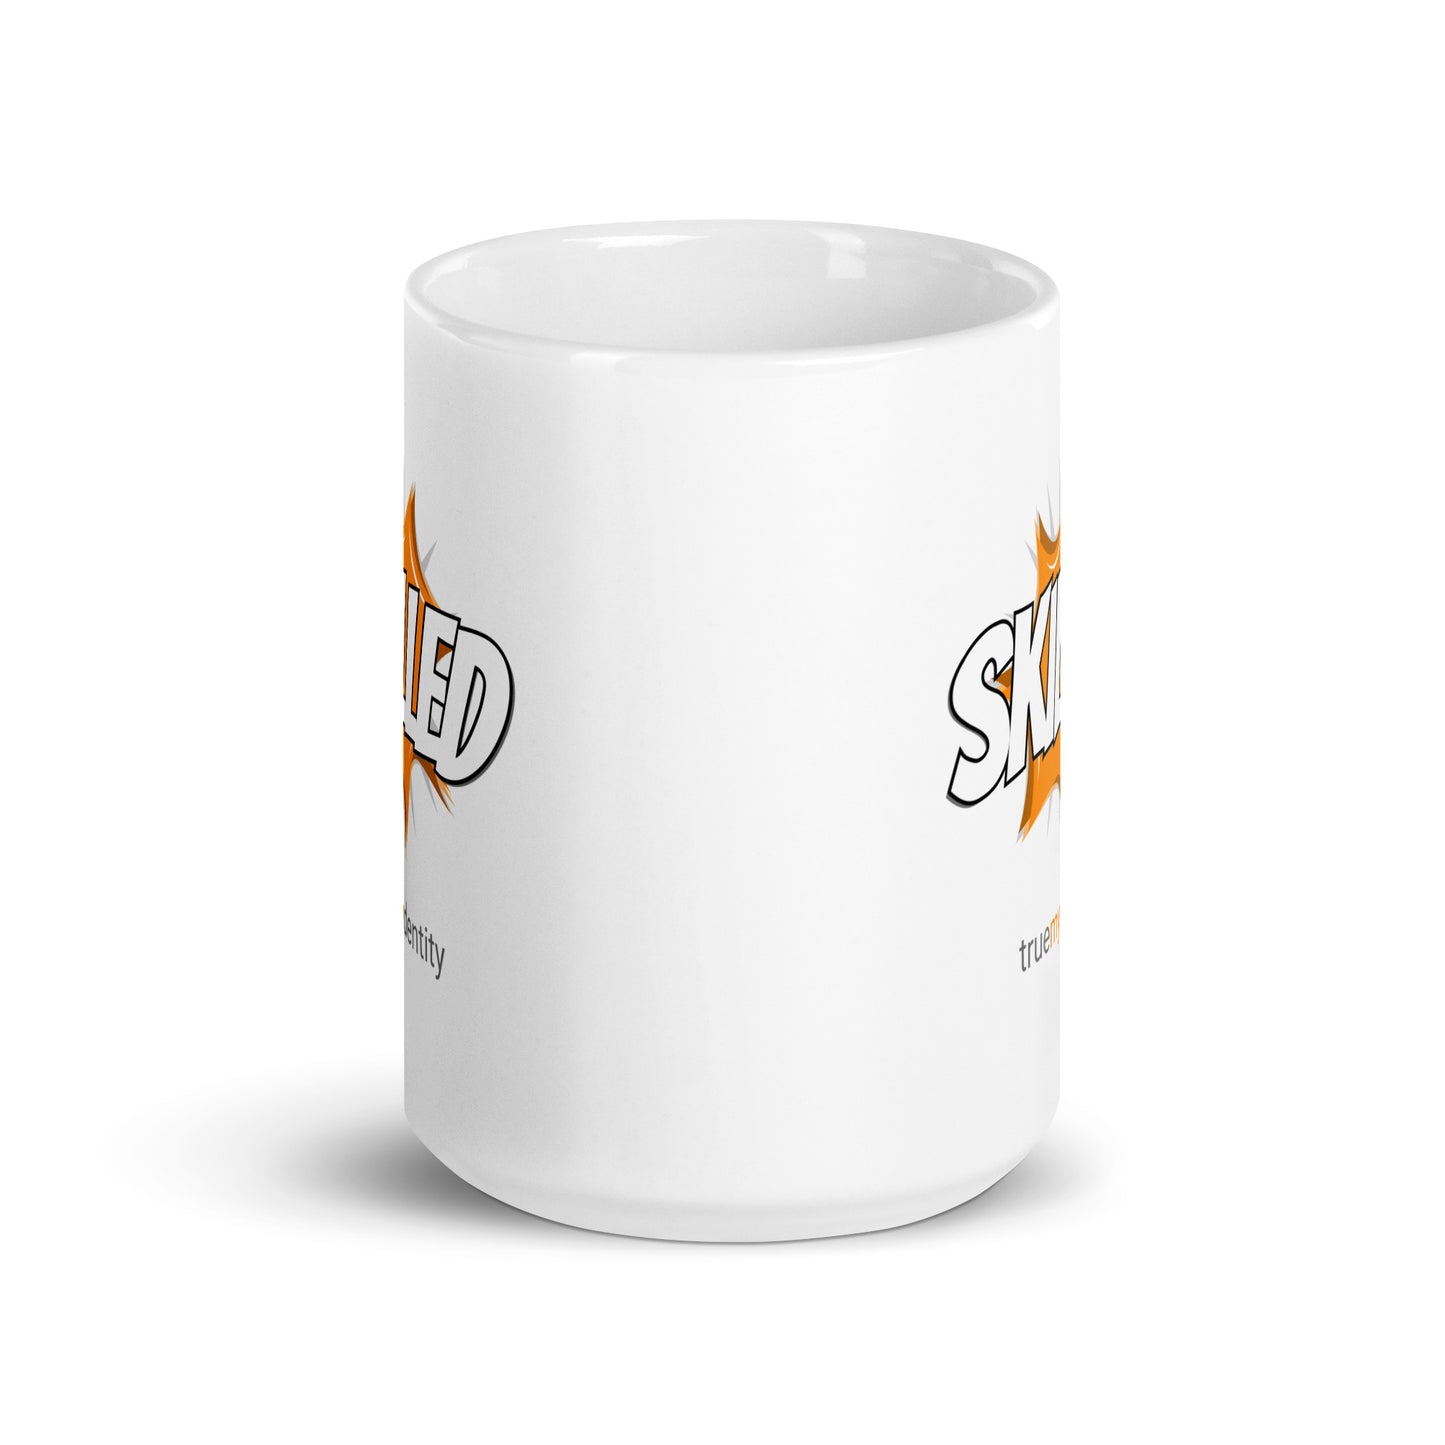 SKILLED White Coffee Mug Action 11 oz or 15 oz